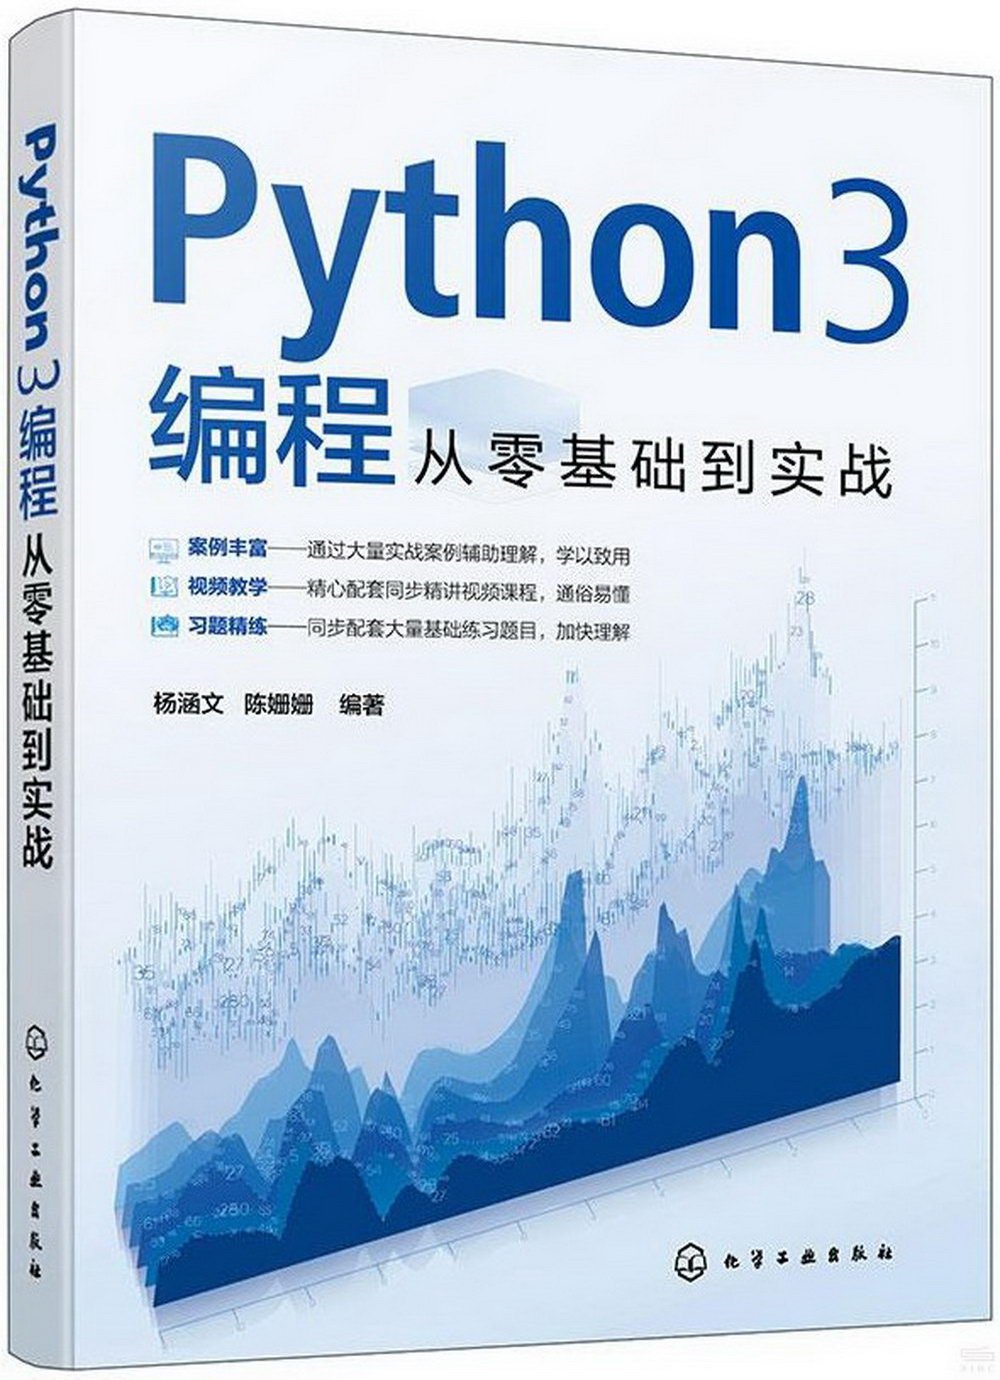 Python3編程從零基礎到實戰